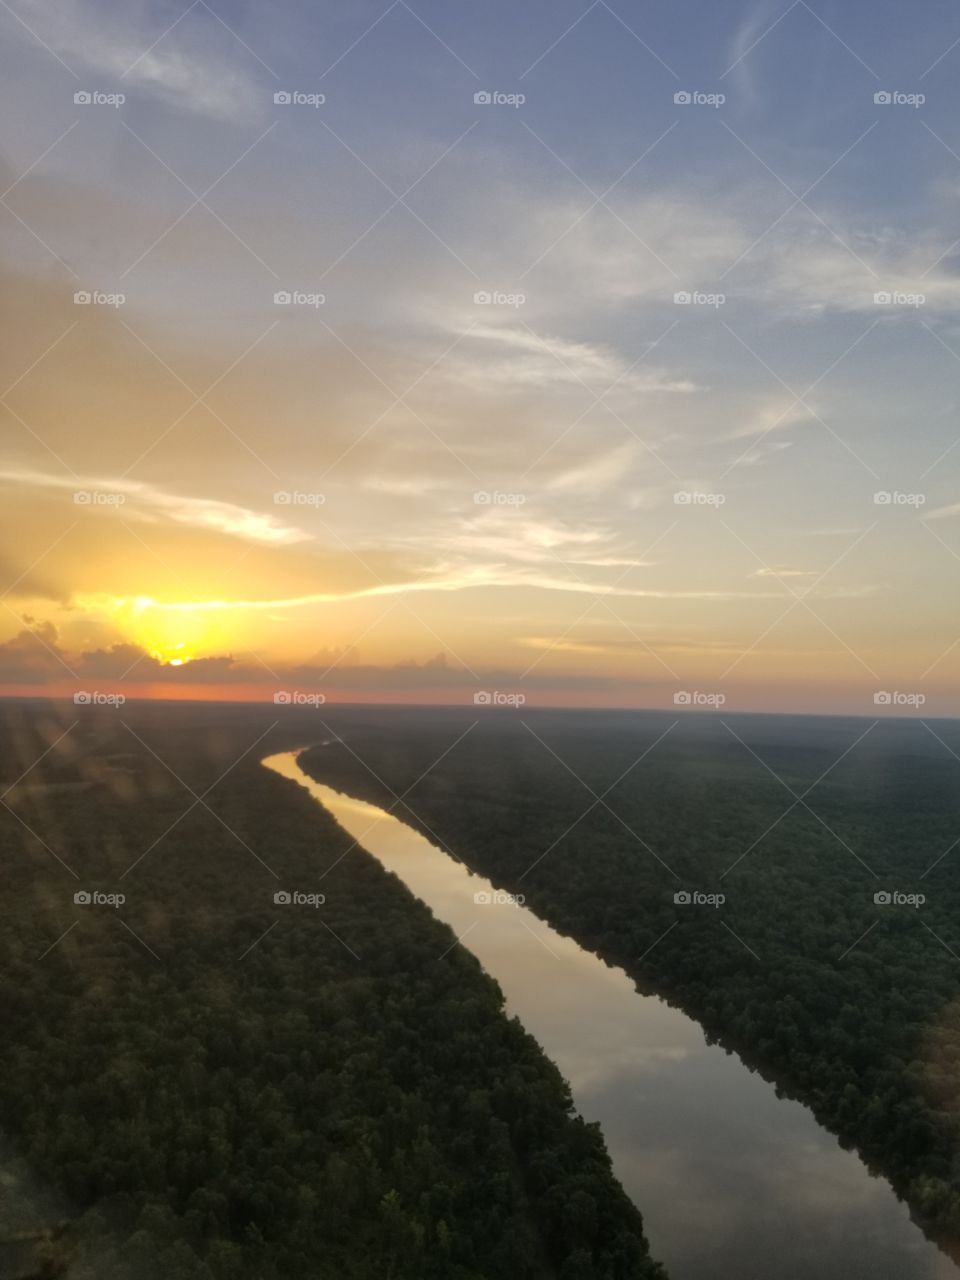 Sunset on the Alabama River